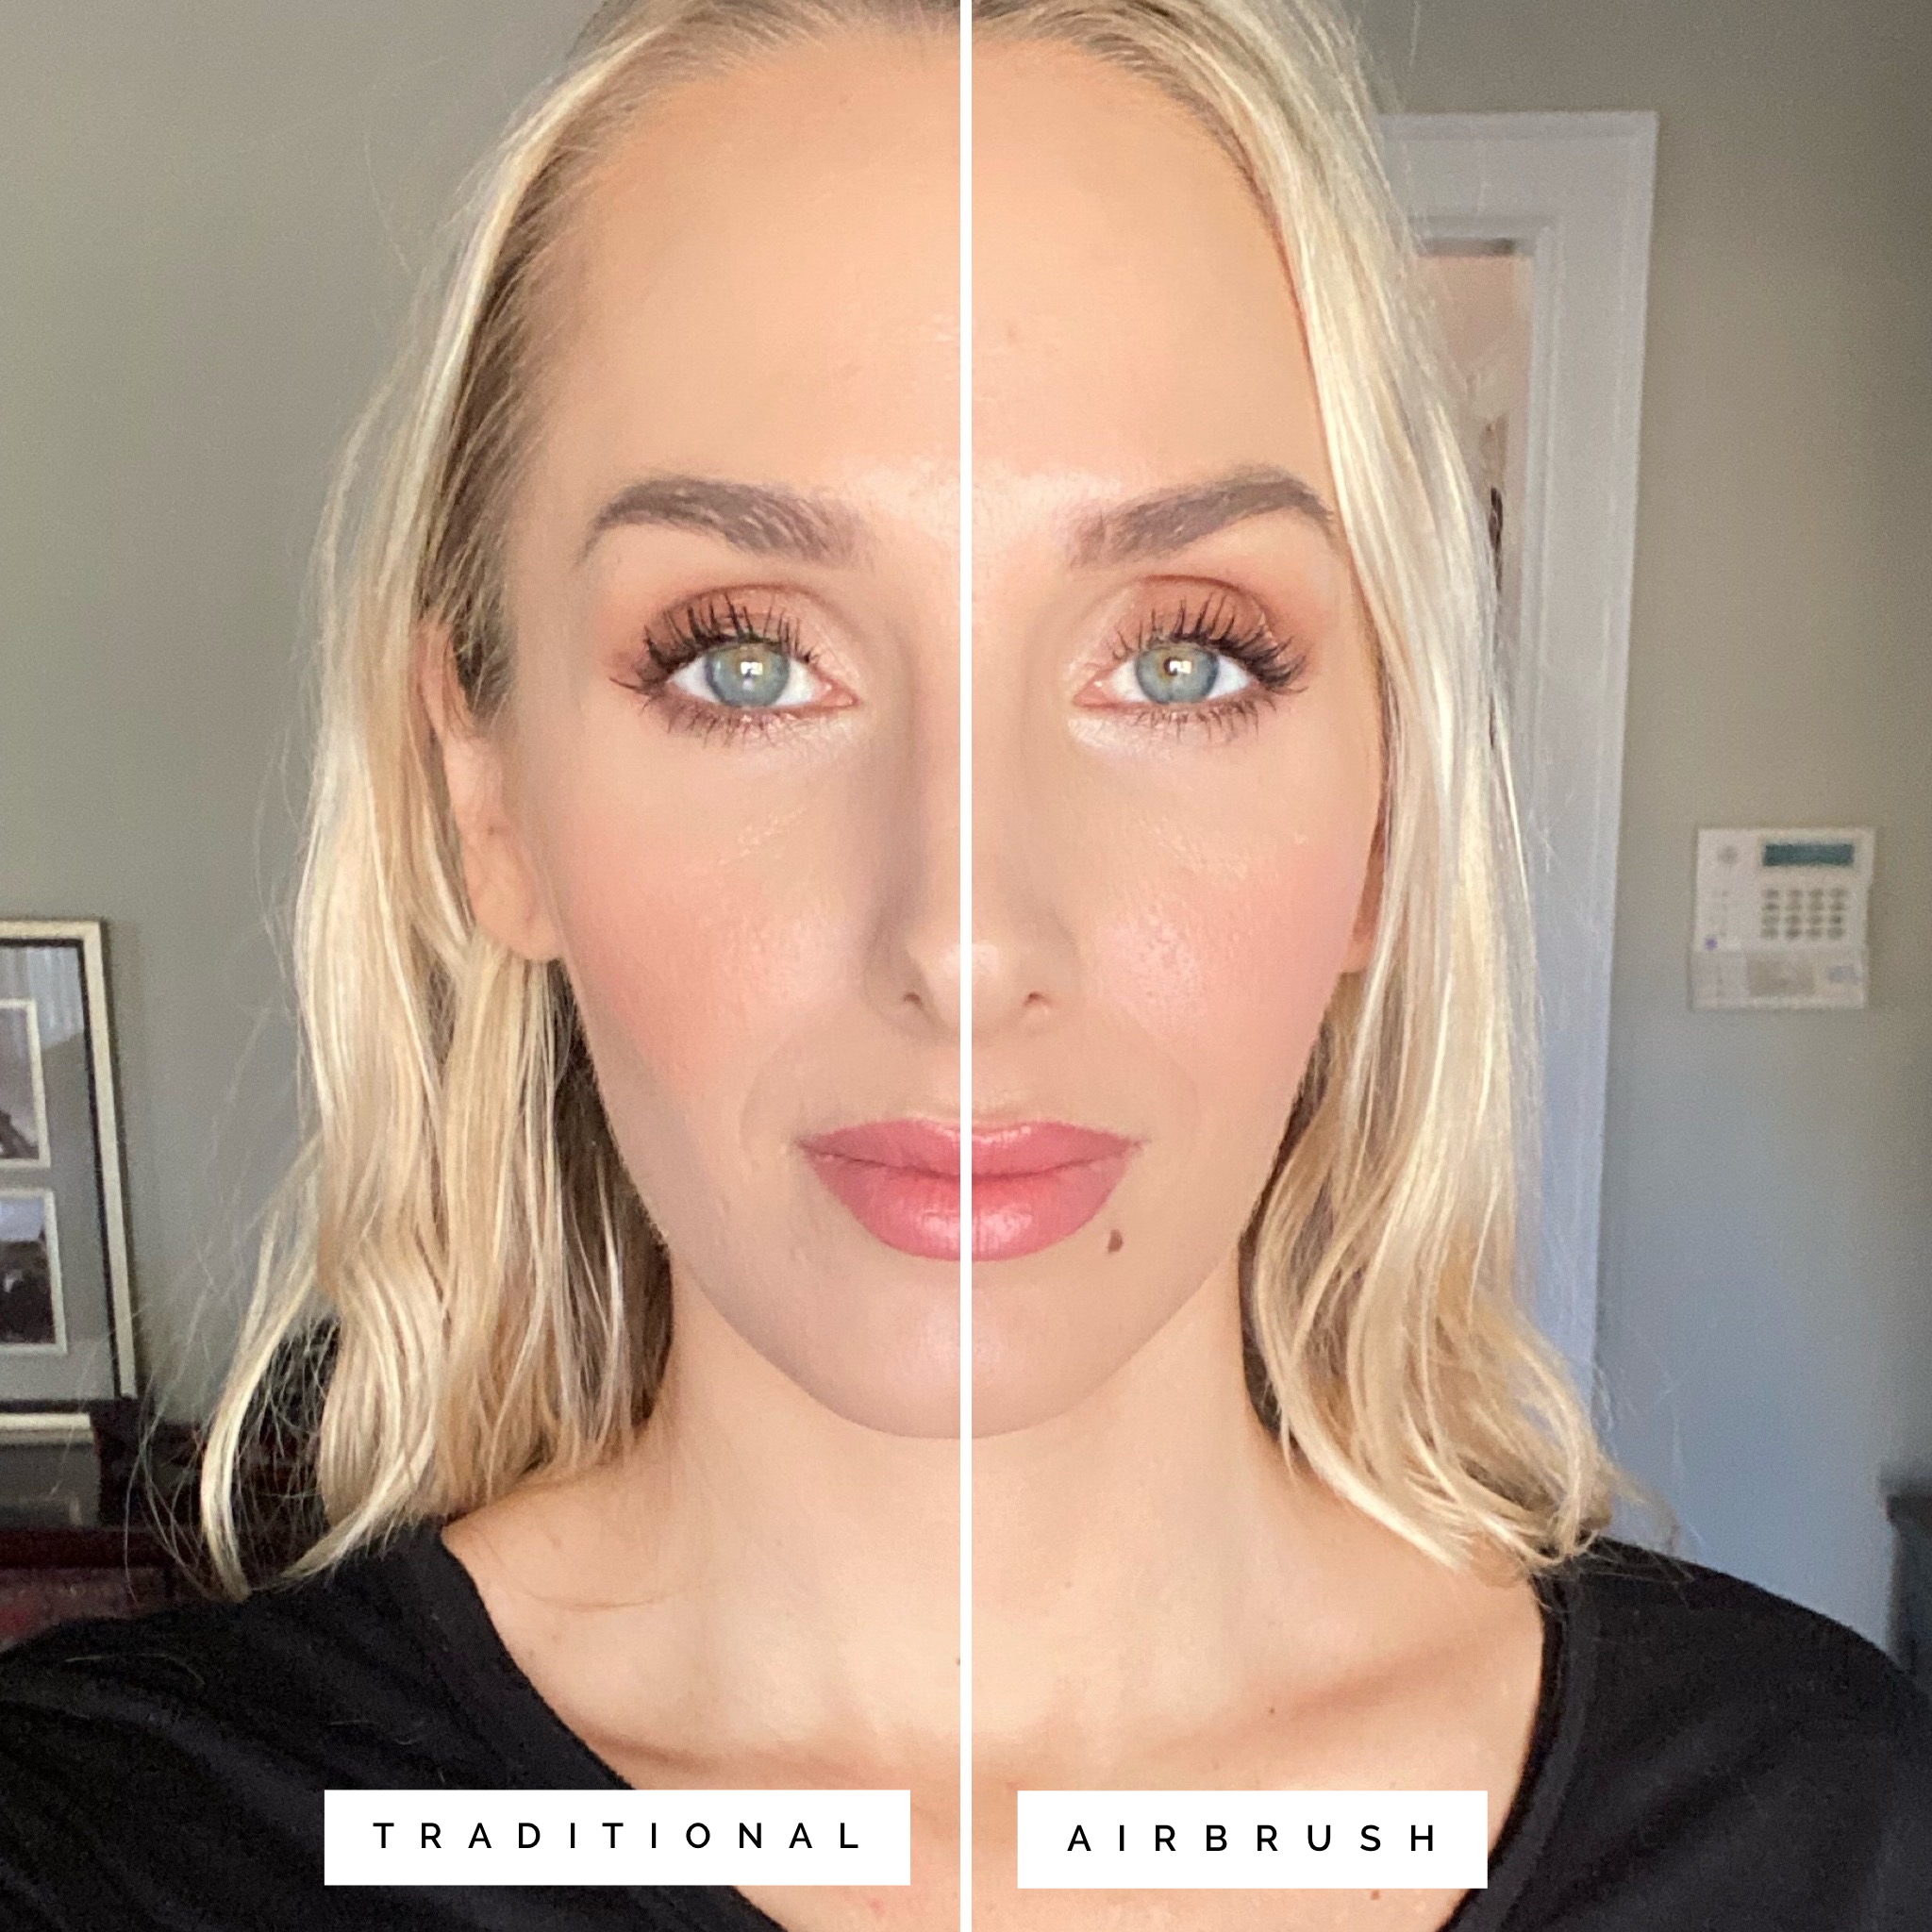 traditional vs airbrush makeup